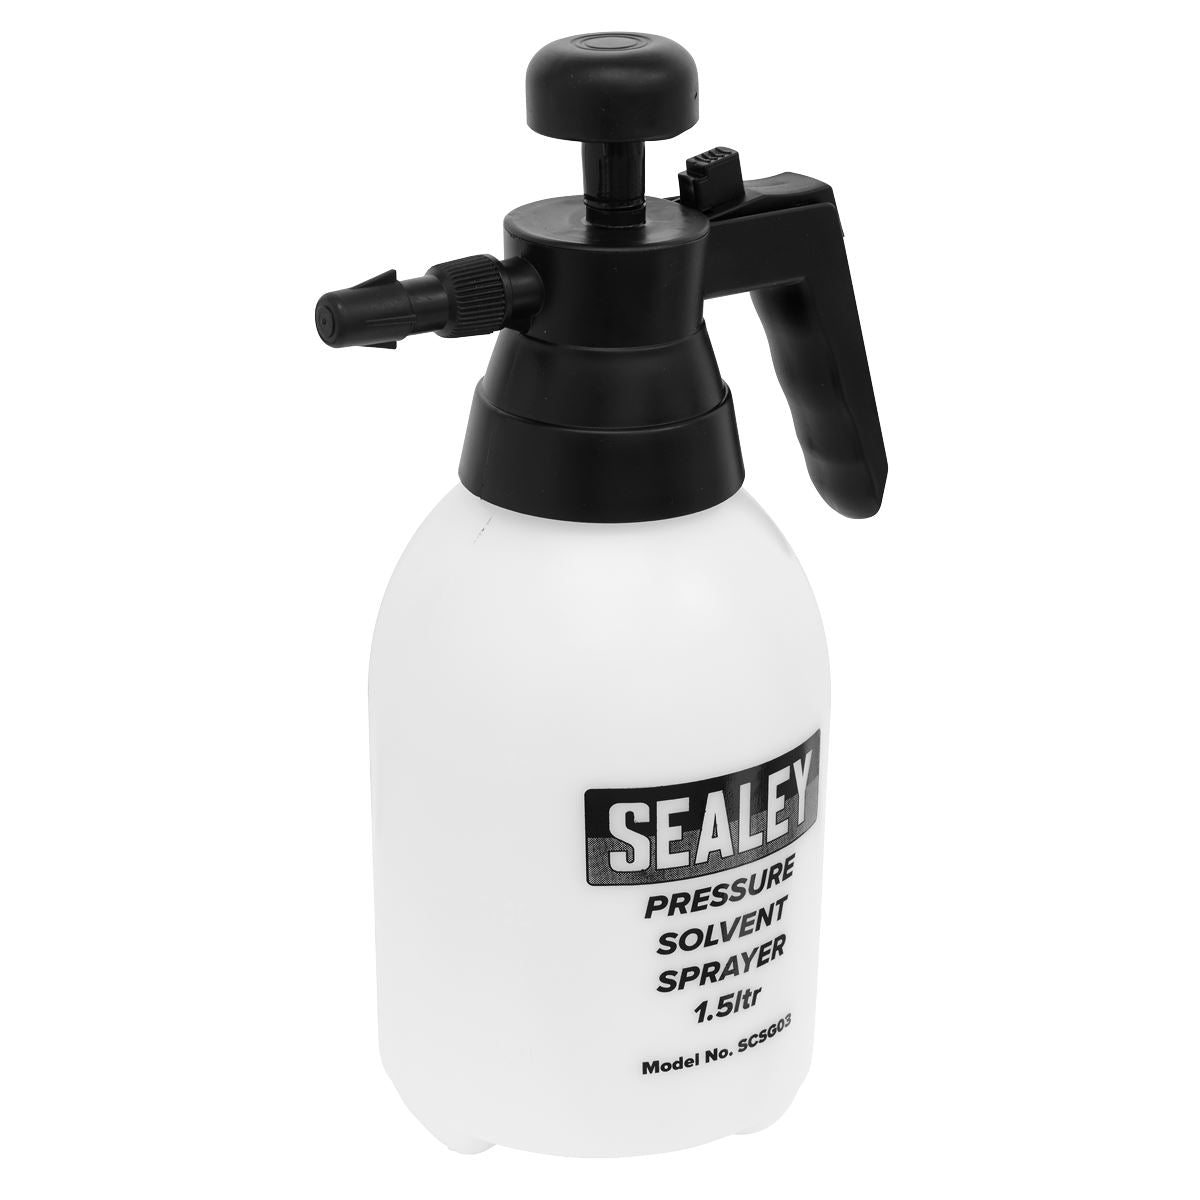 Sealey Pressure Sprayer with Viton Seals 1.5L SCSG03